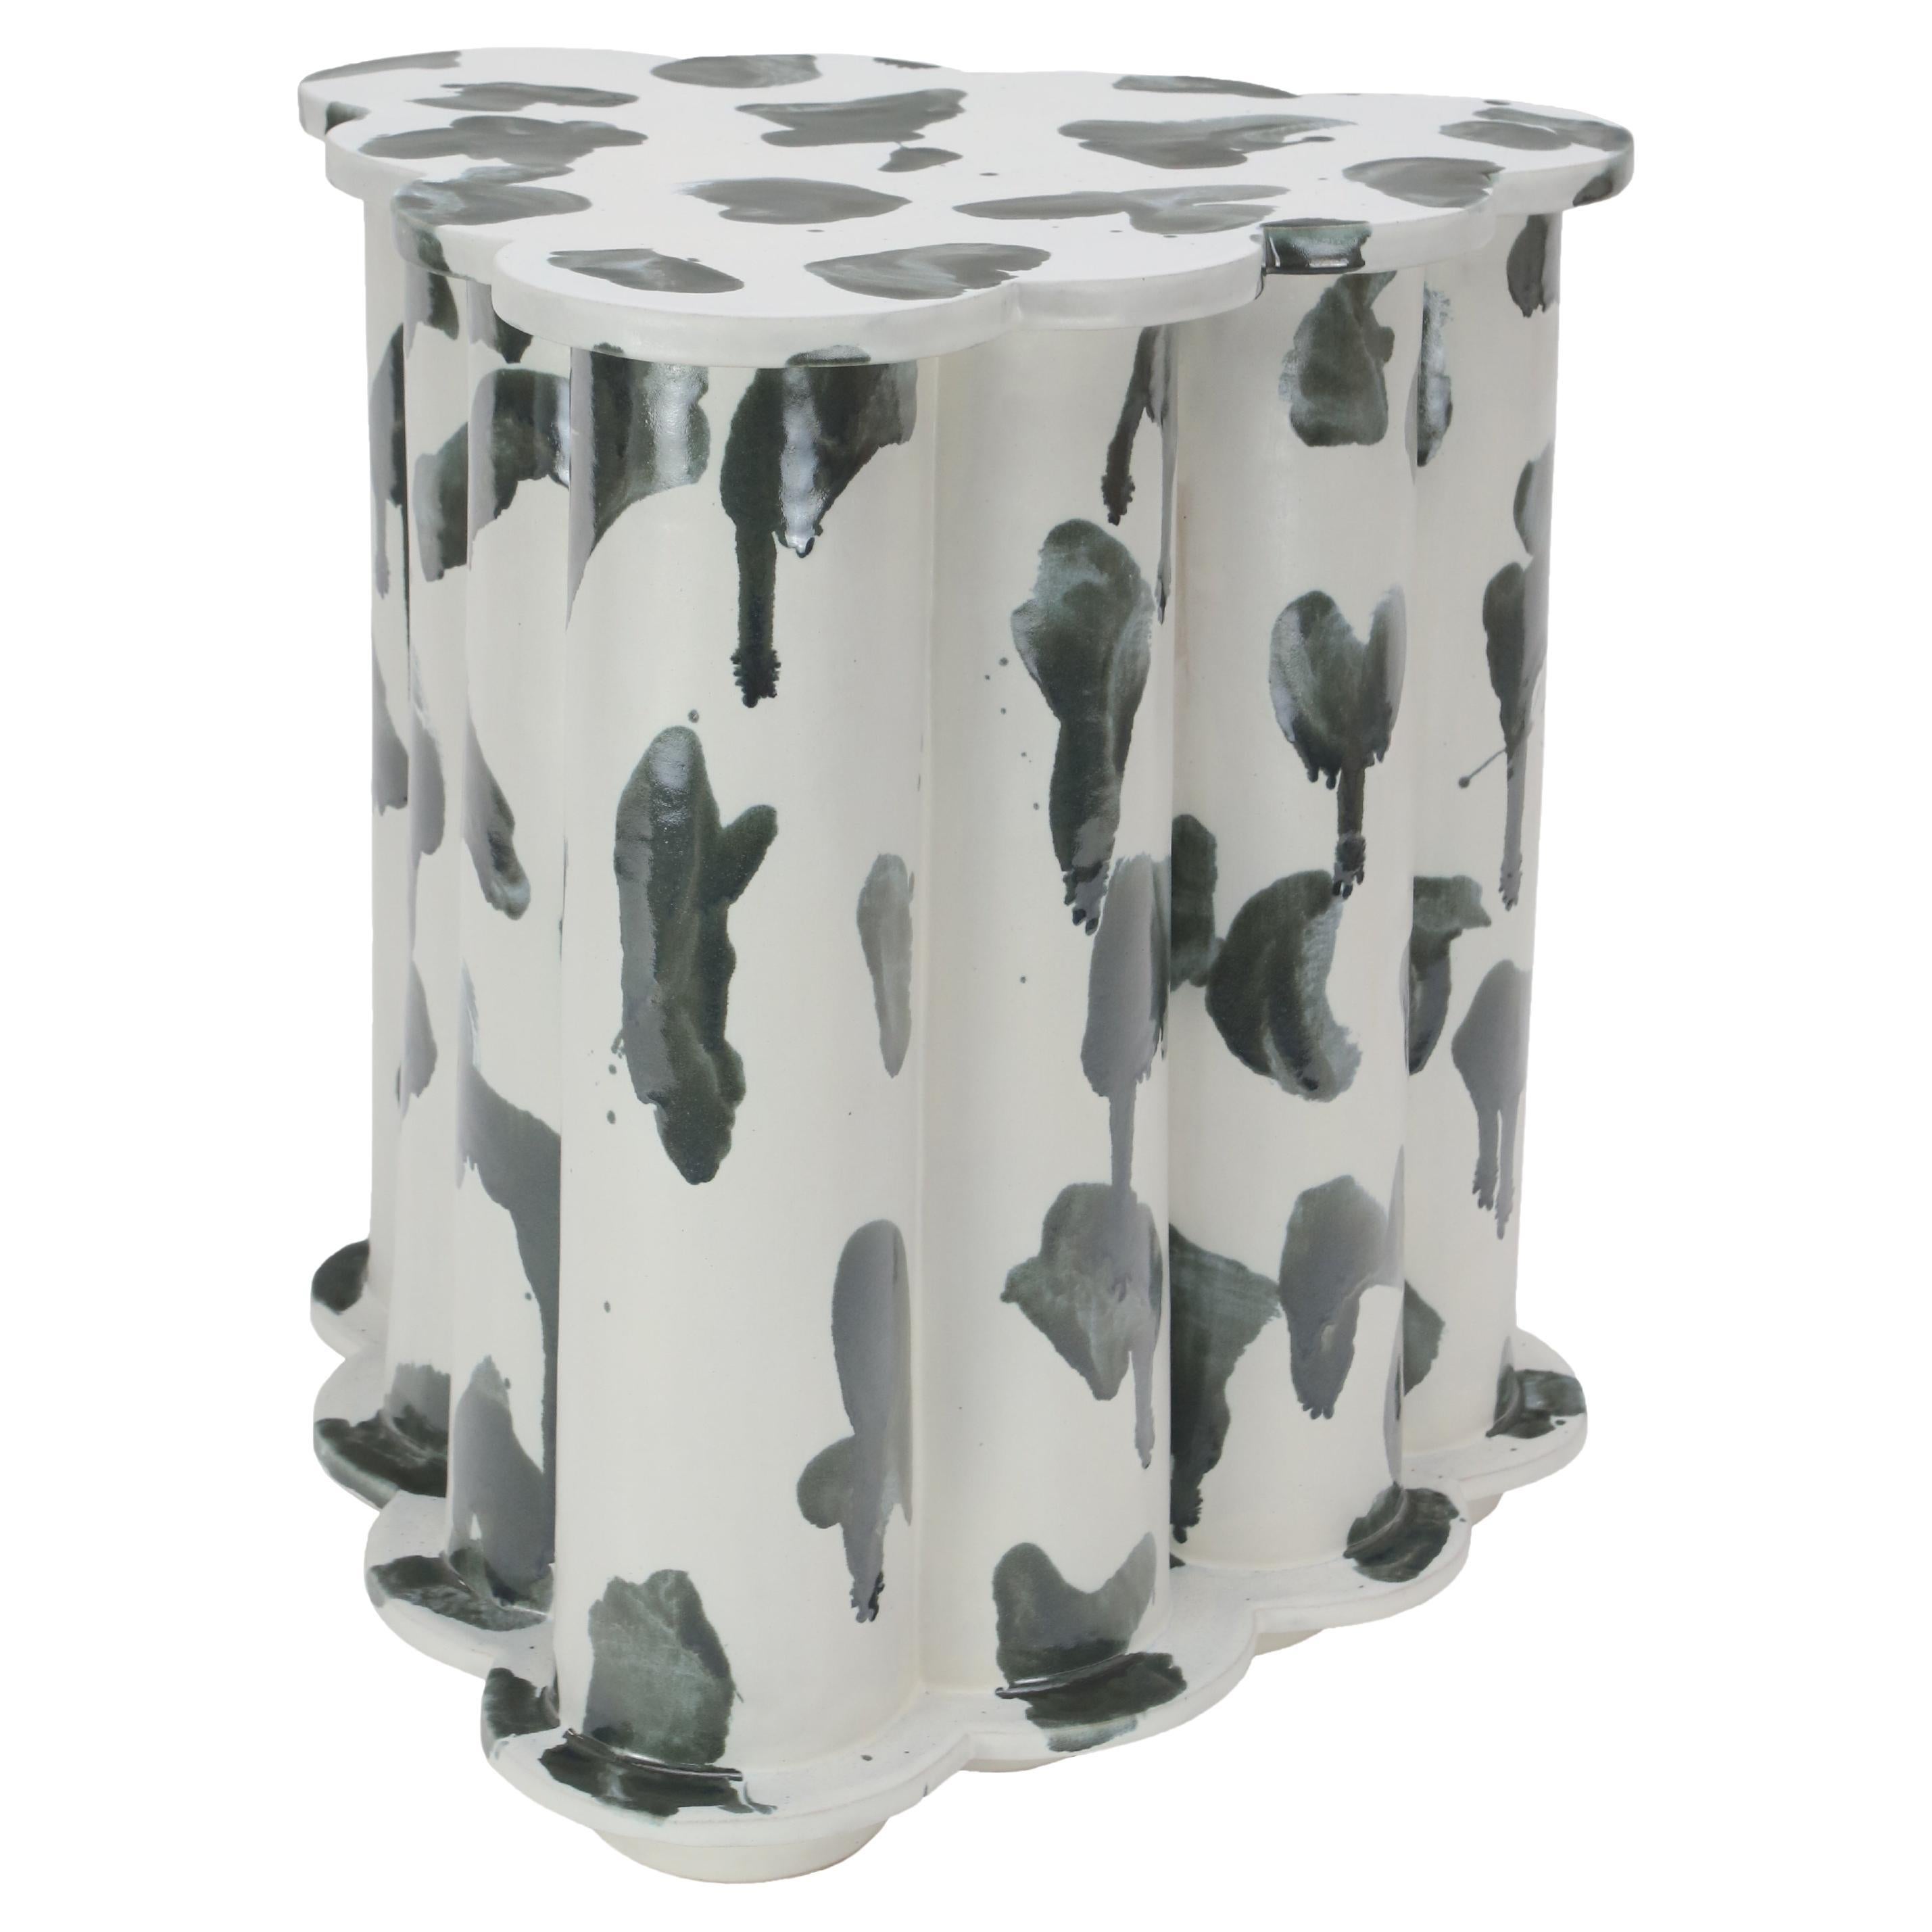 Single Tier Ruffle Ceramic Side Table & Stool in Drippy Palladium by Bzippy For Sale